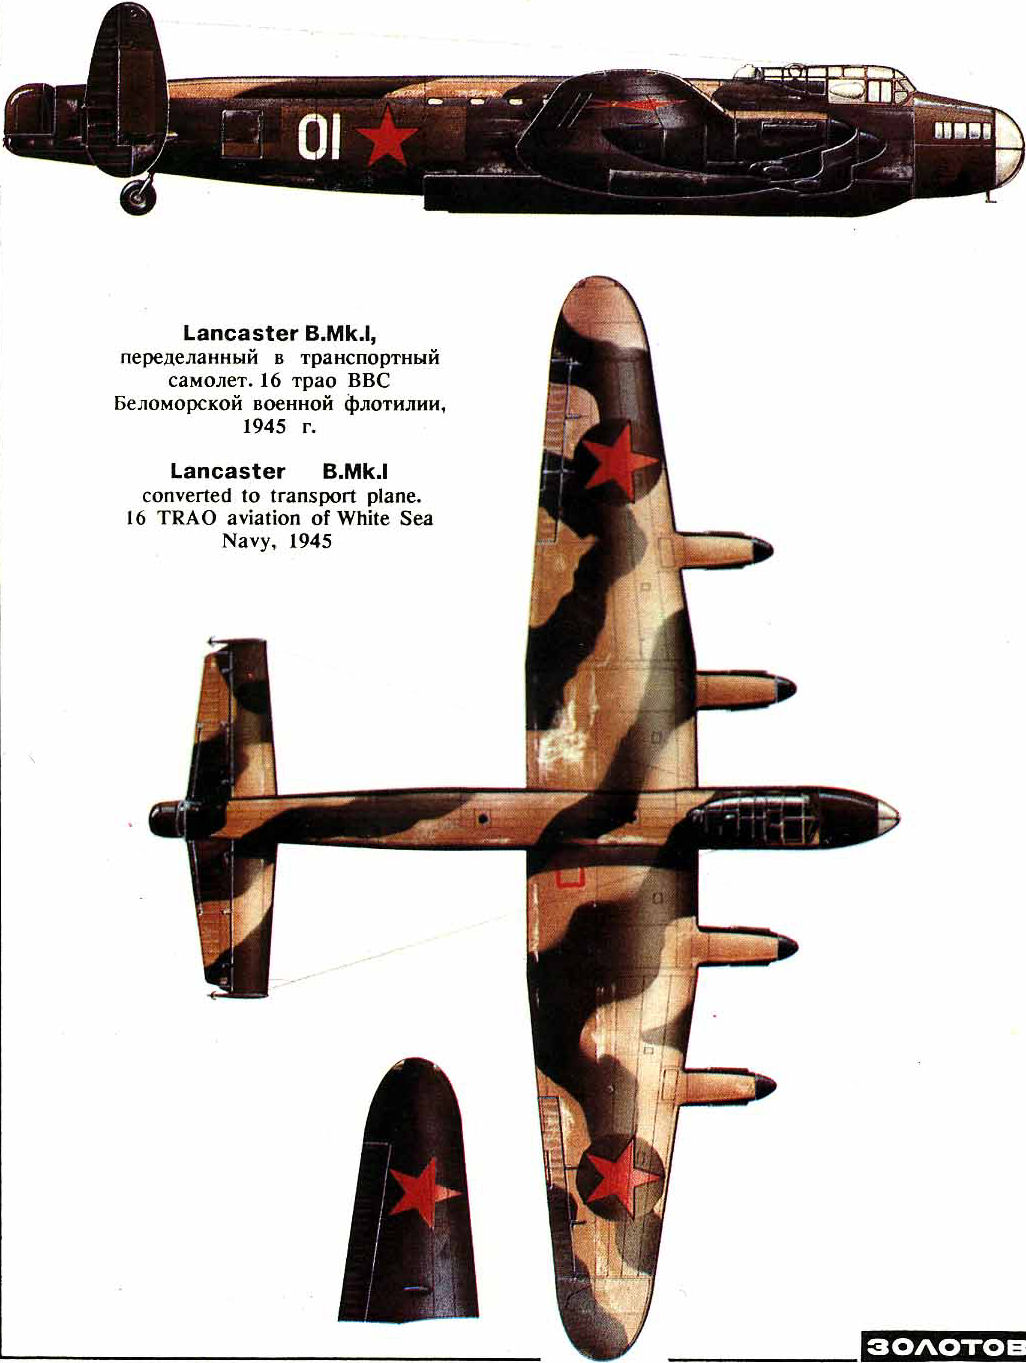      Avro Lancaster -   